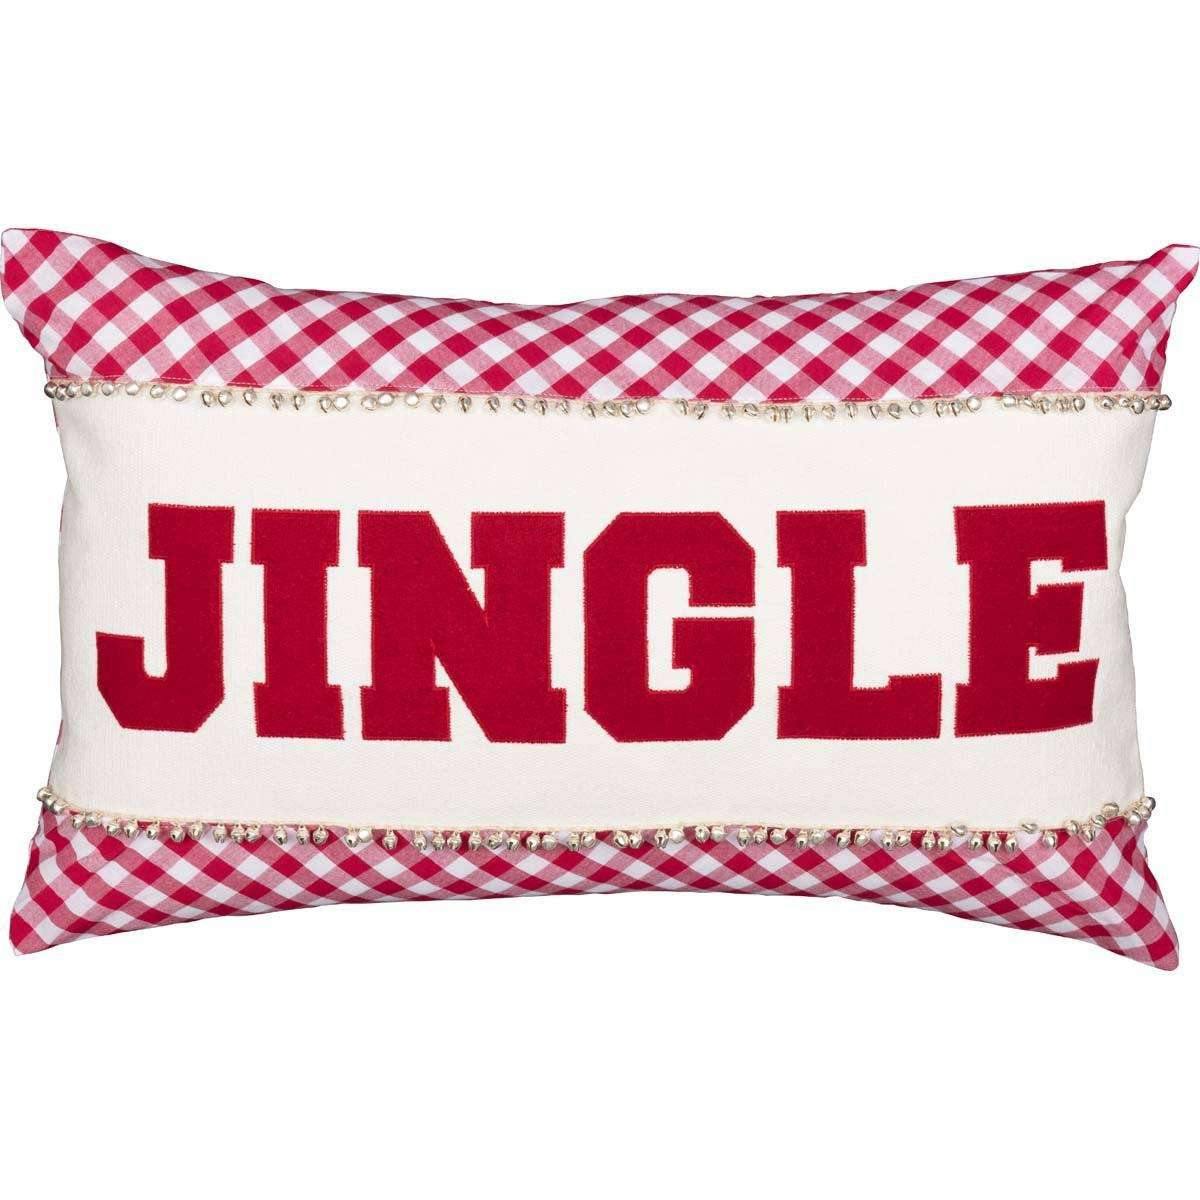 Emmie Jingle Pillow 14x22 - The Fox Decor